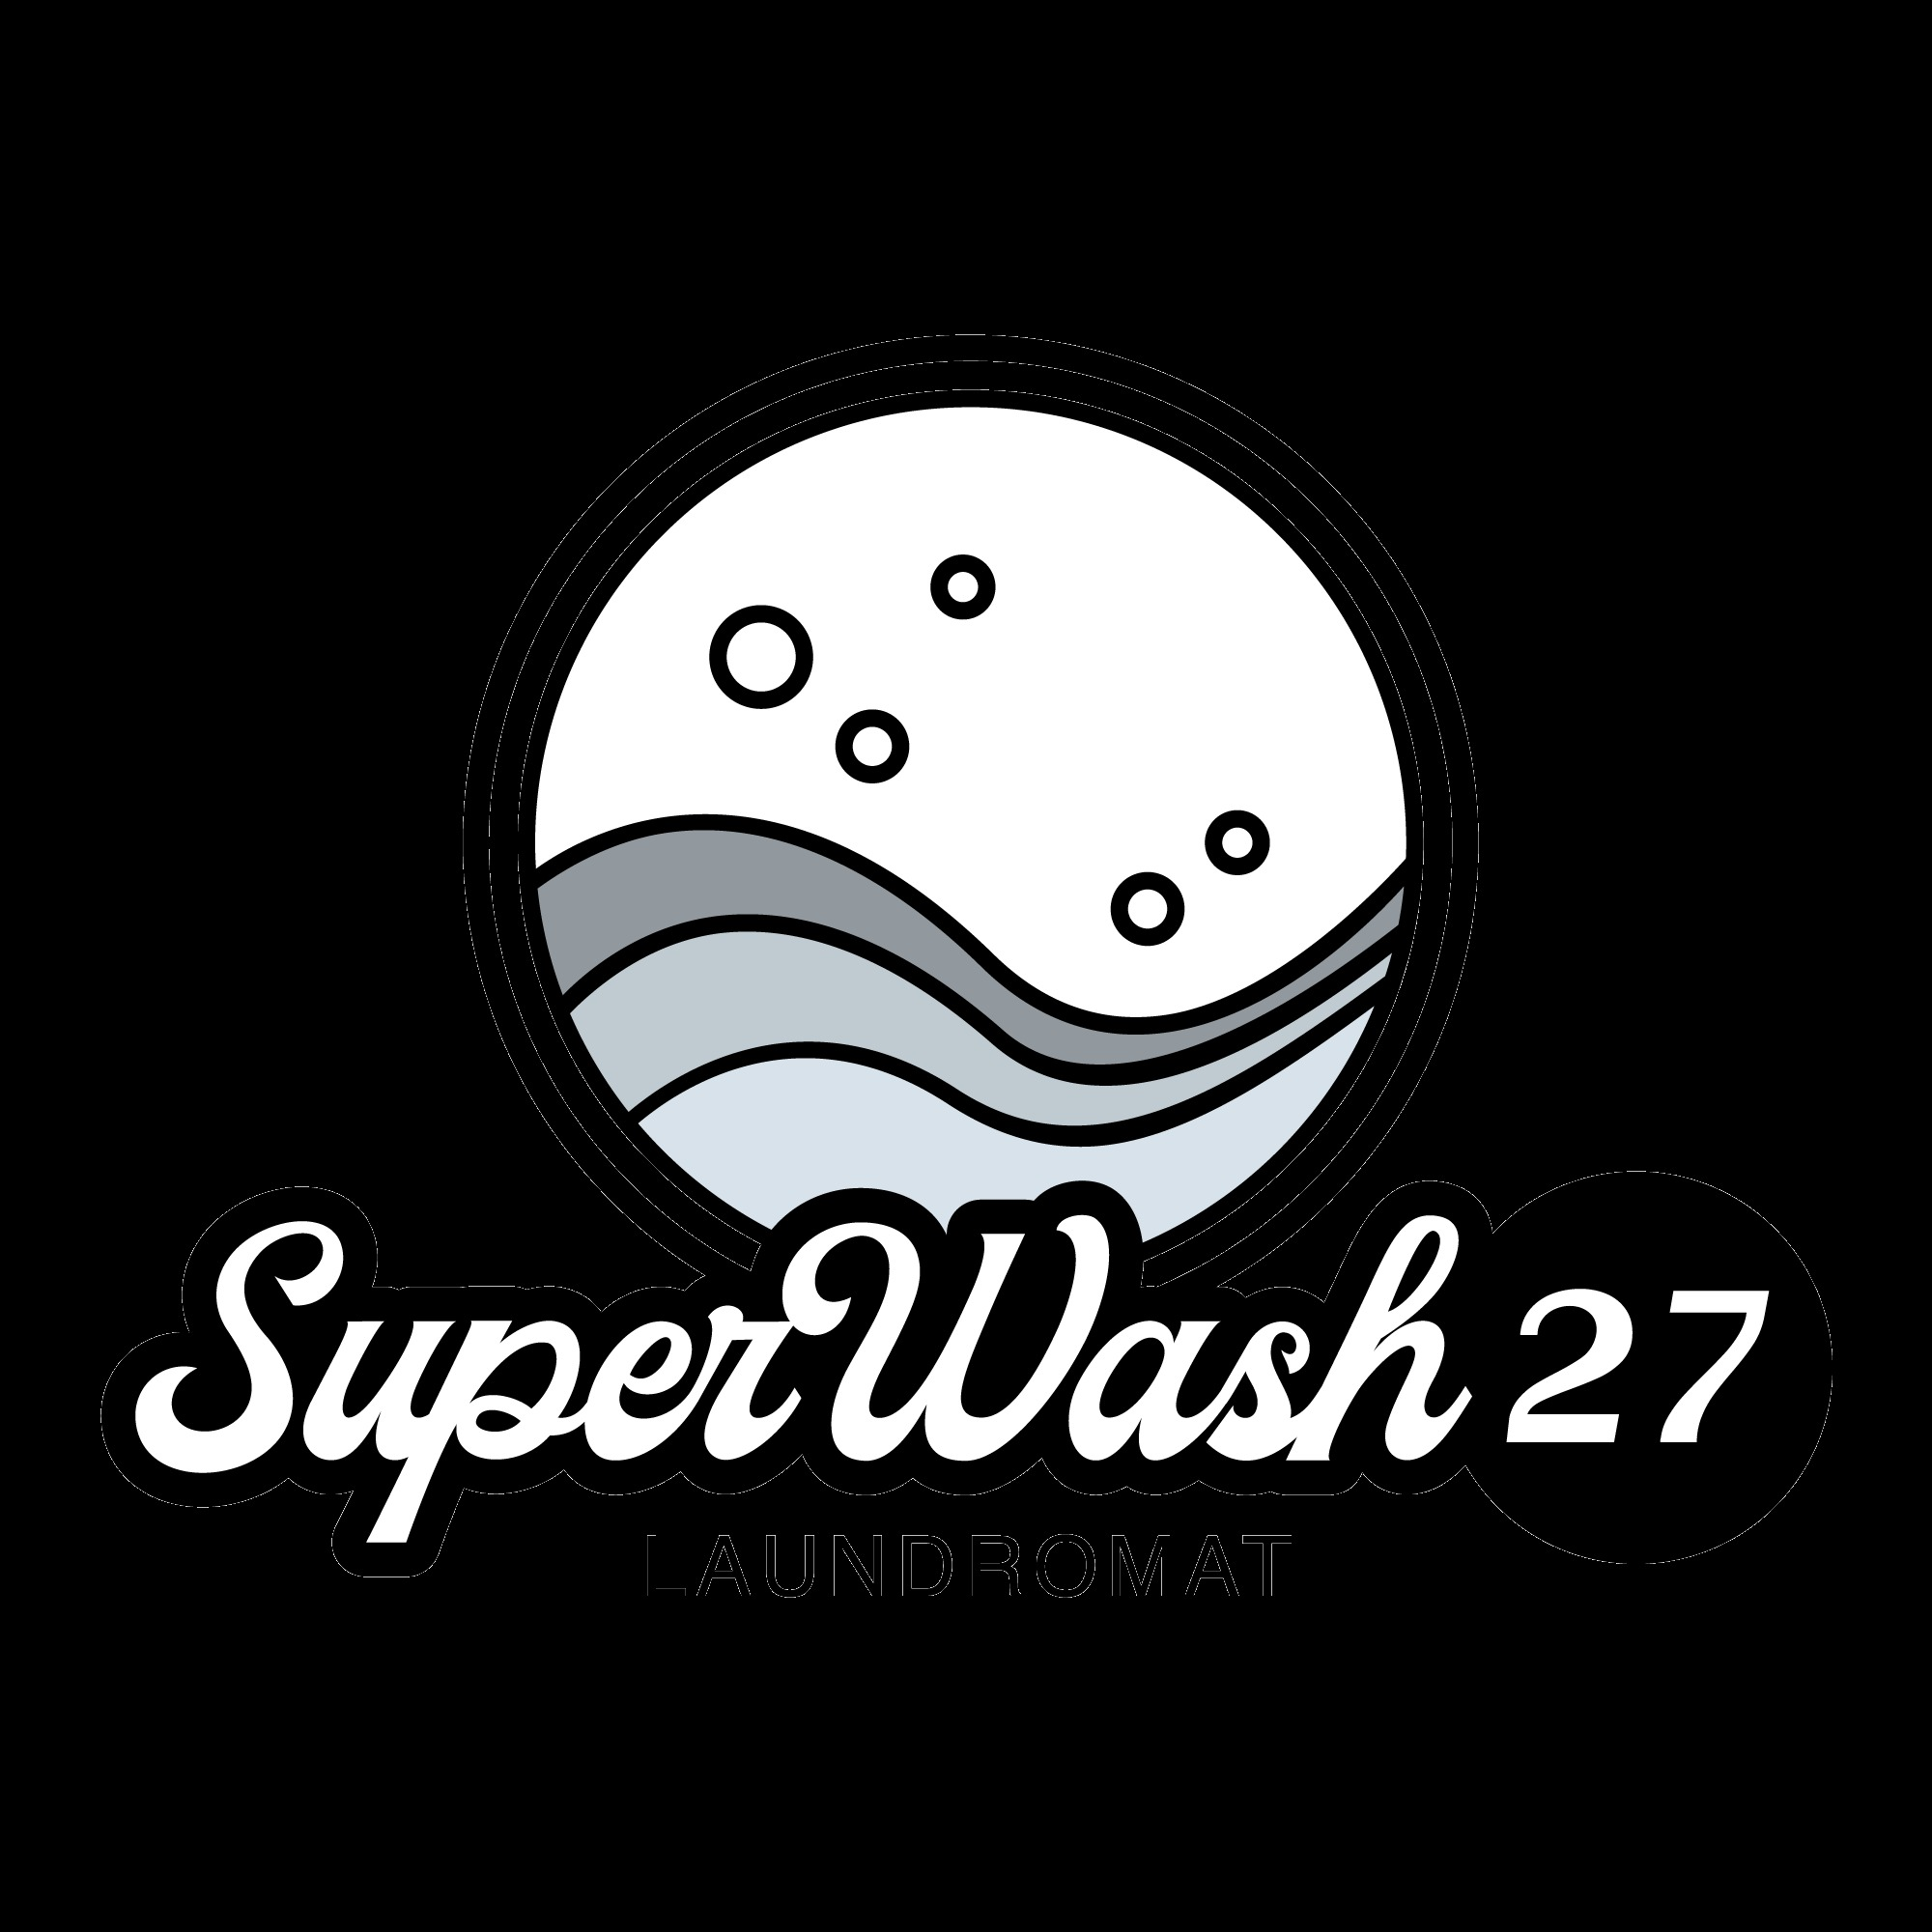 Super Wash 27